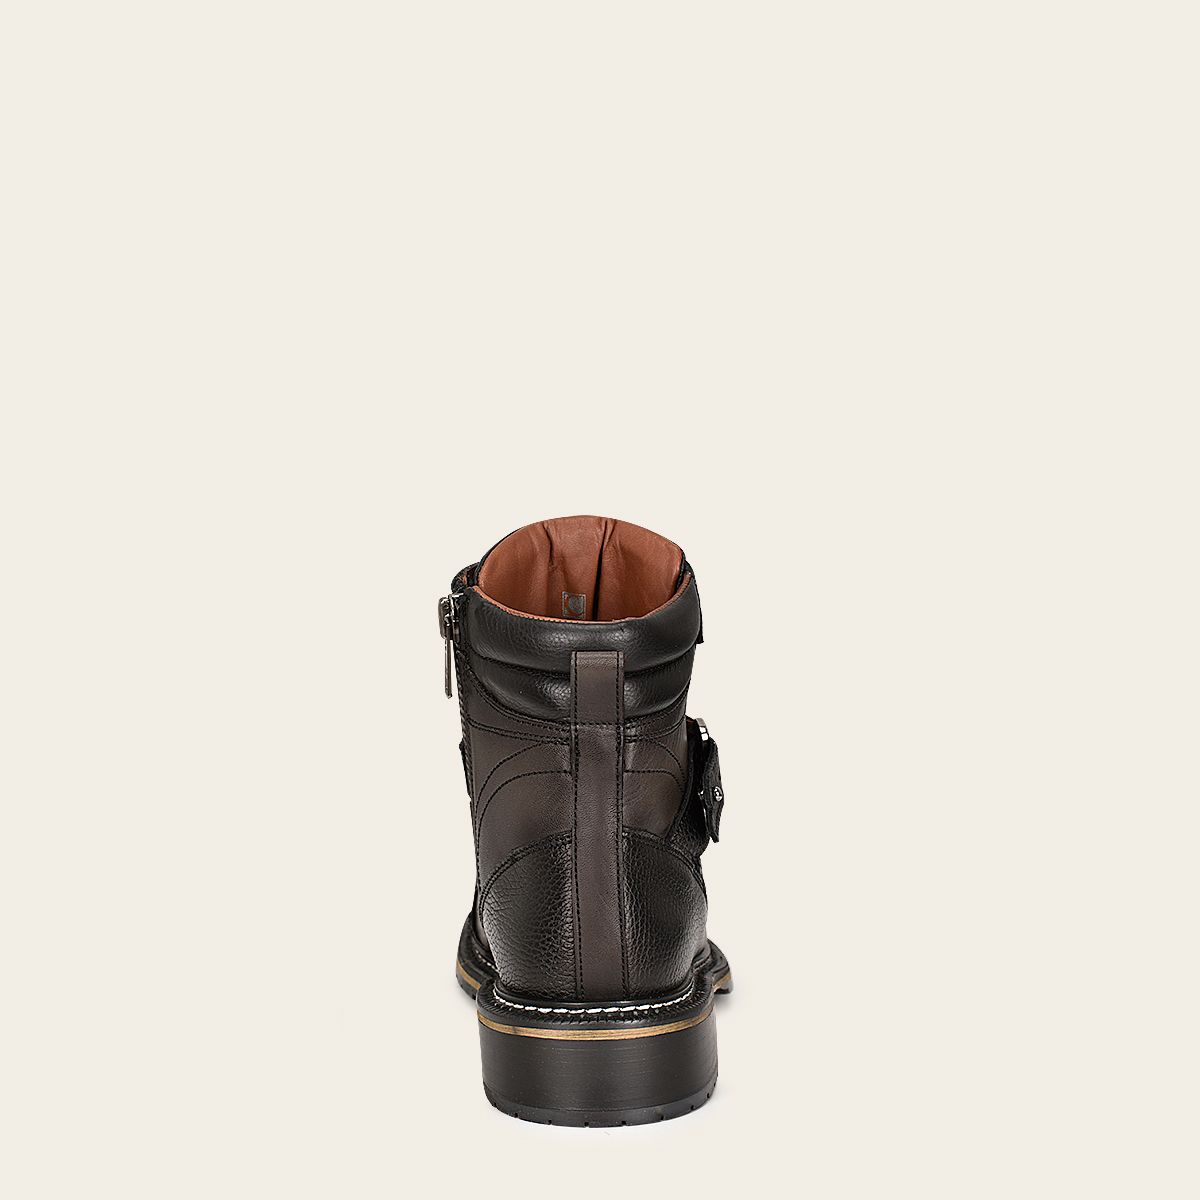 Urban black cayman boot